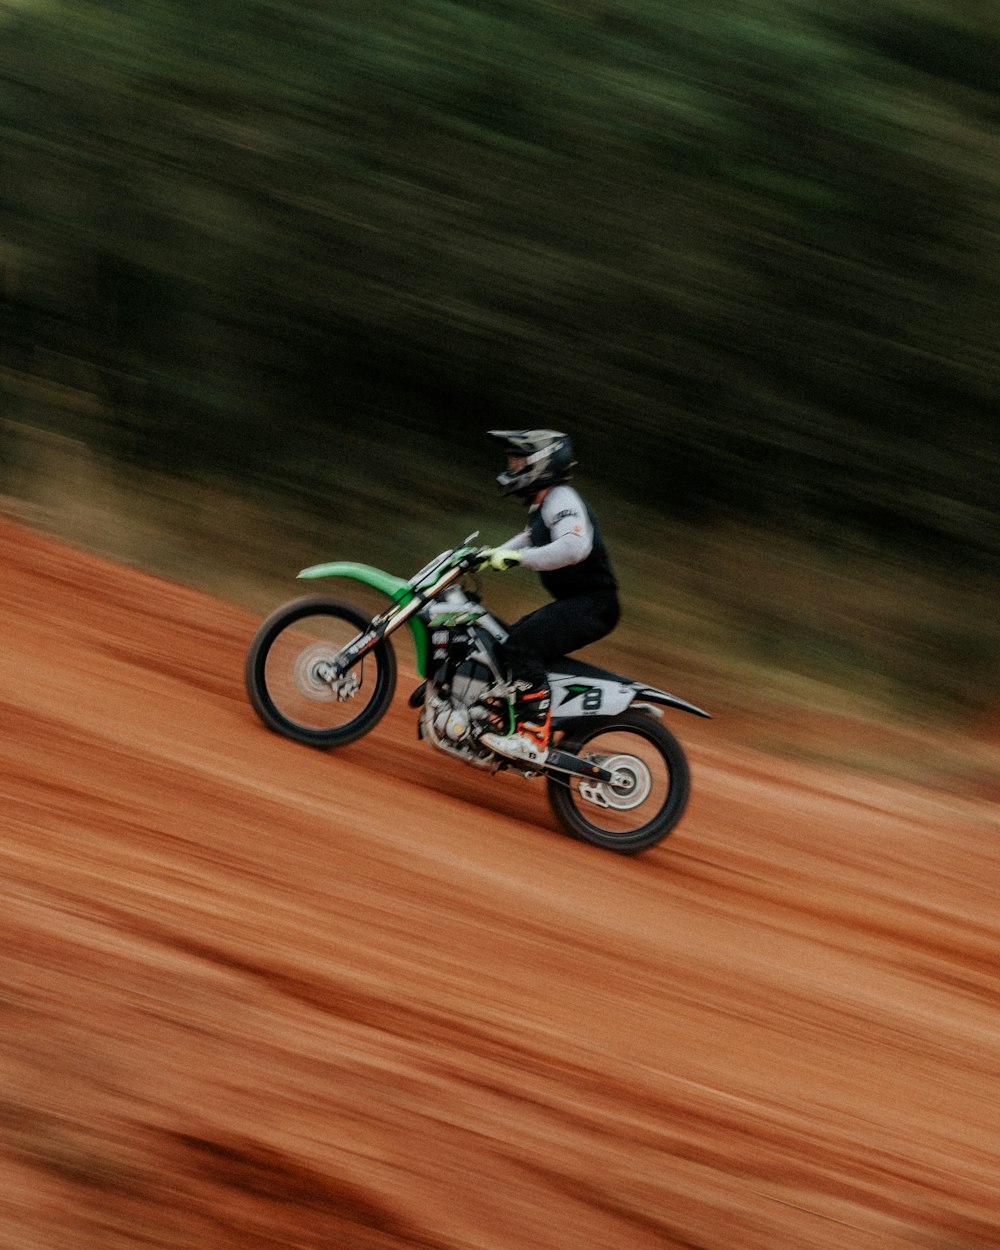 man riding motocross dirt bike on brown field during daytime